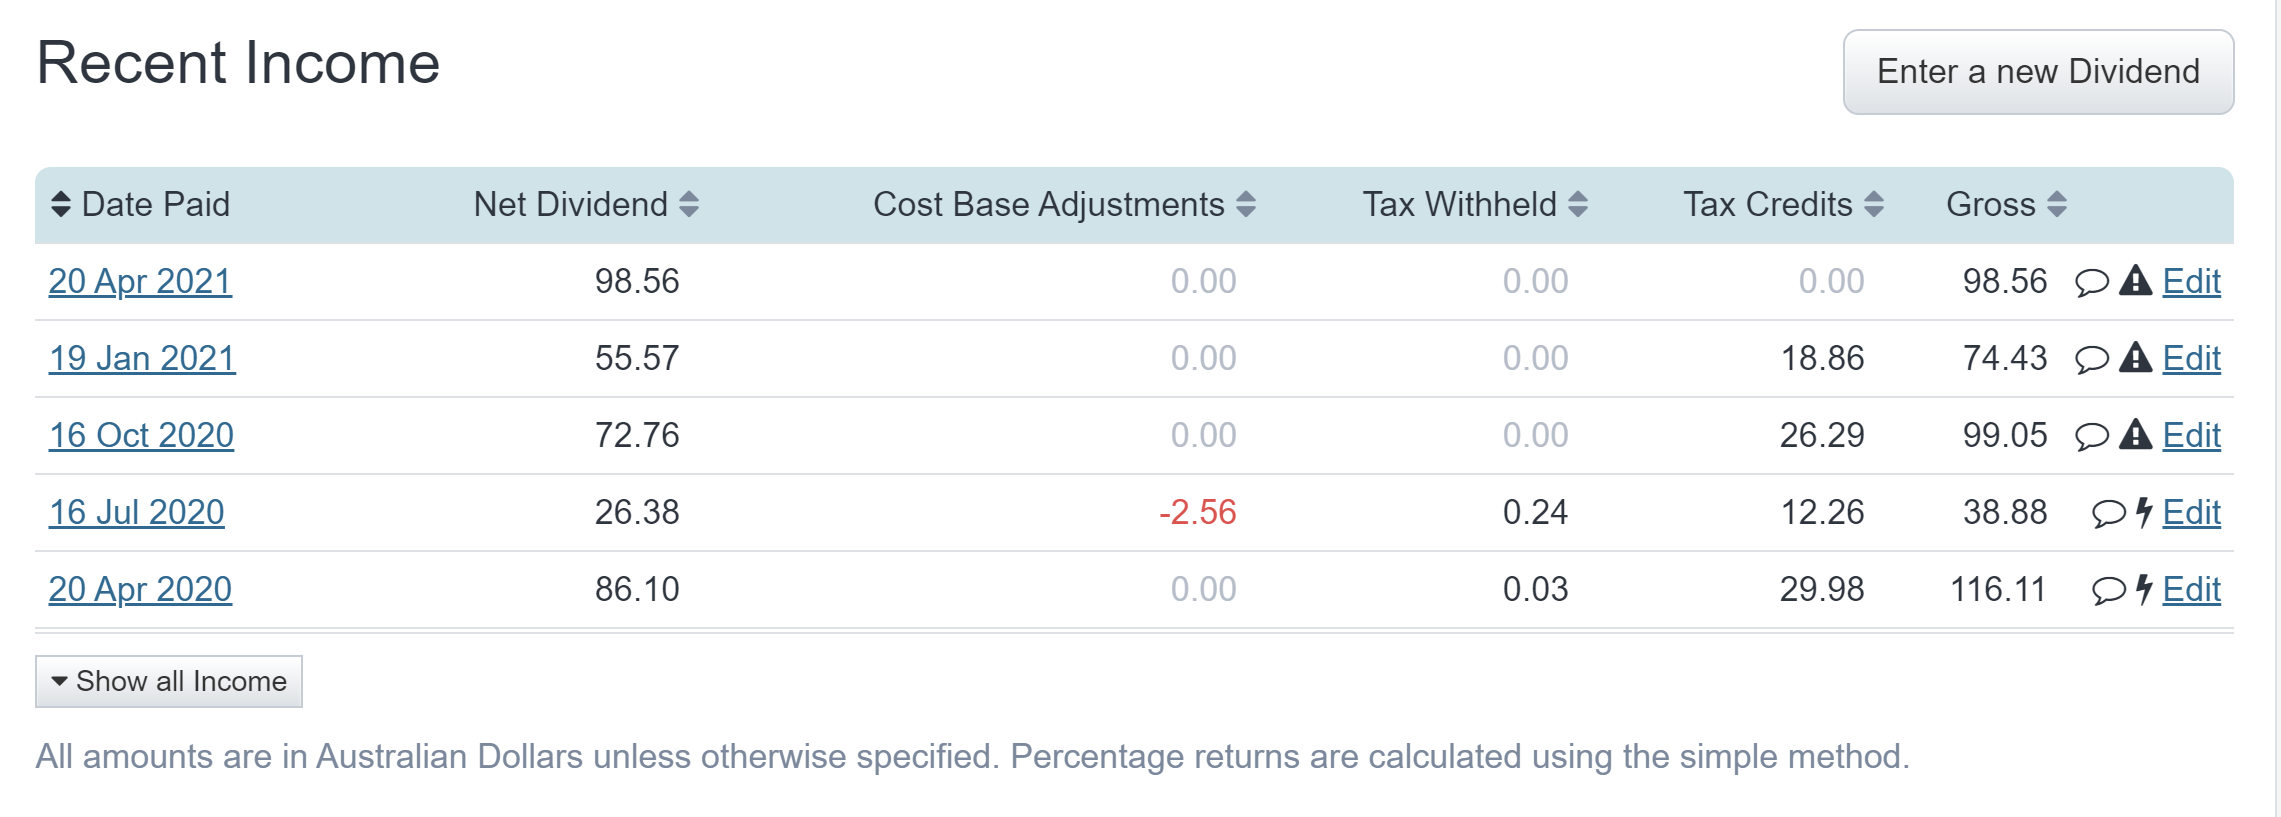 Vanguards Distribution Tax Estimates for the ETFs including Dividend